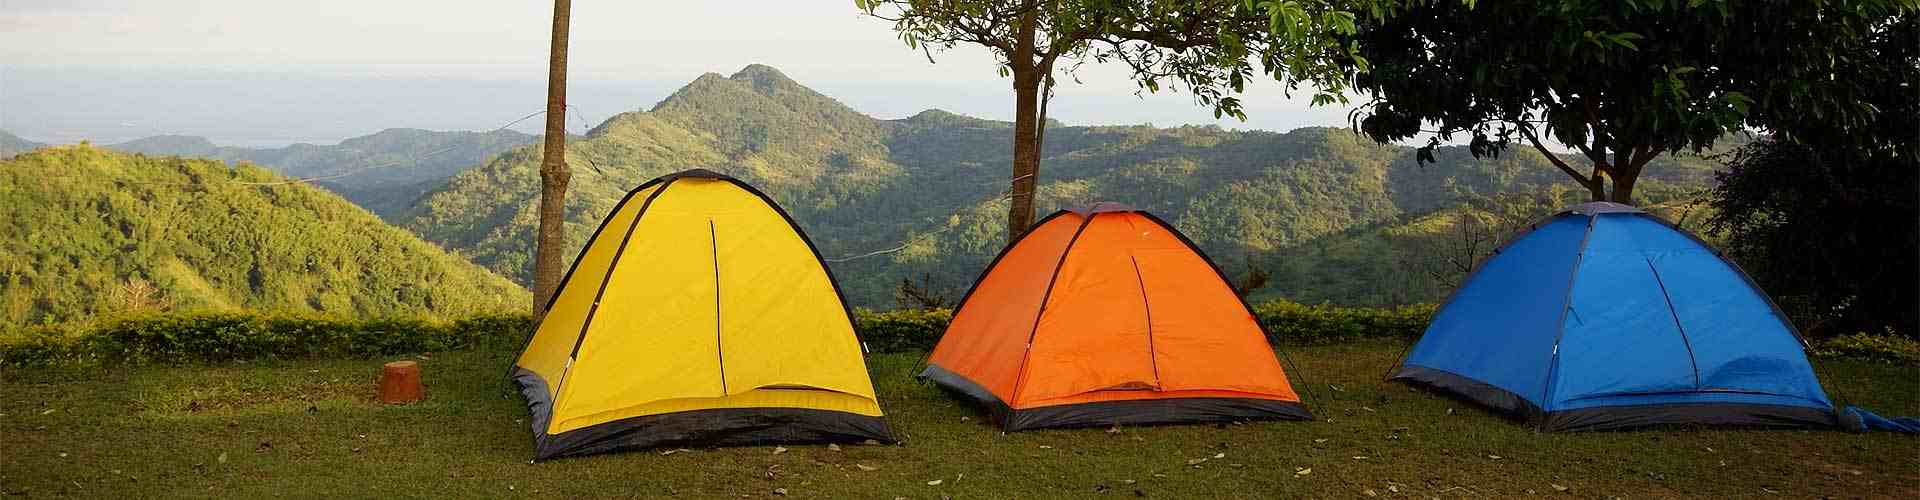 camping o bungalow en Saldeana